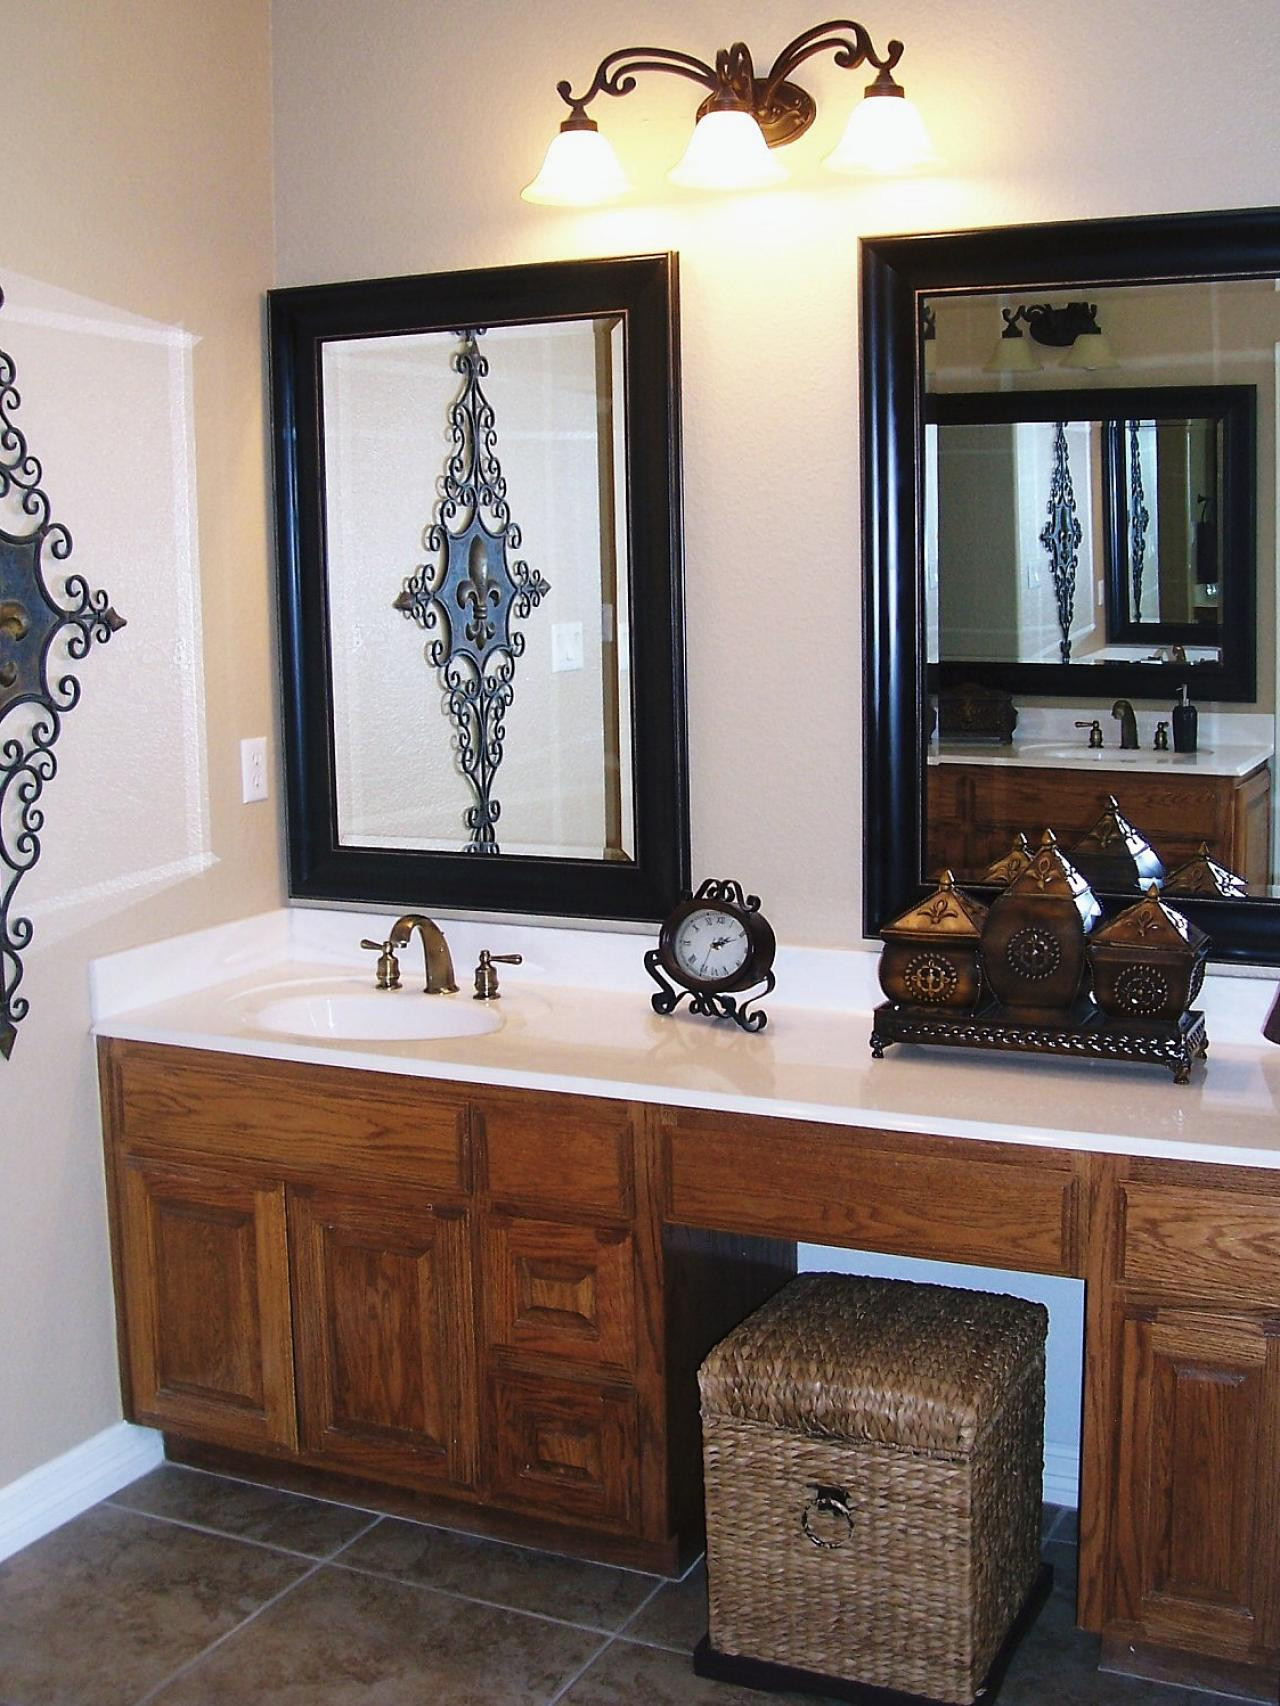 Pictures Of Bathroom Vanities
 Bathroom Vanity Mirrors for Aesthetics and Functions